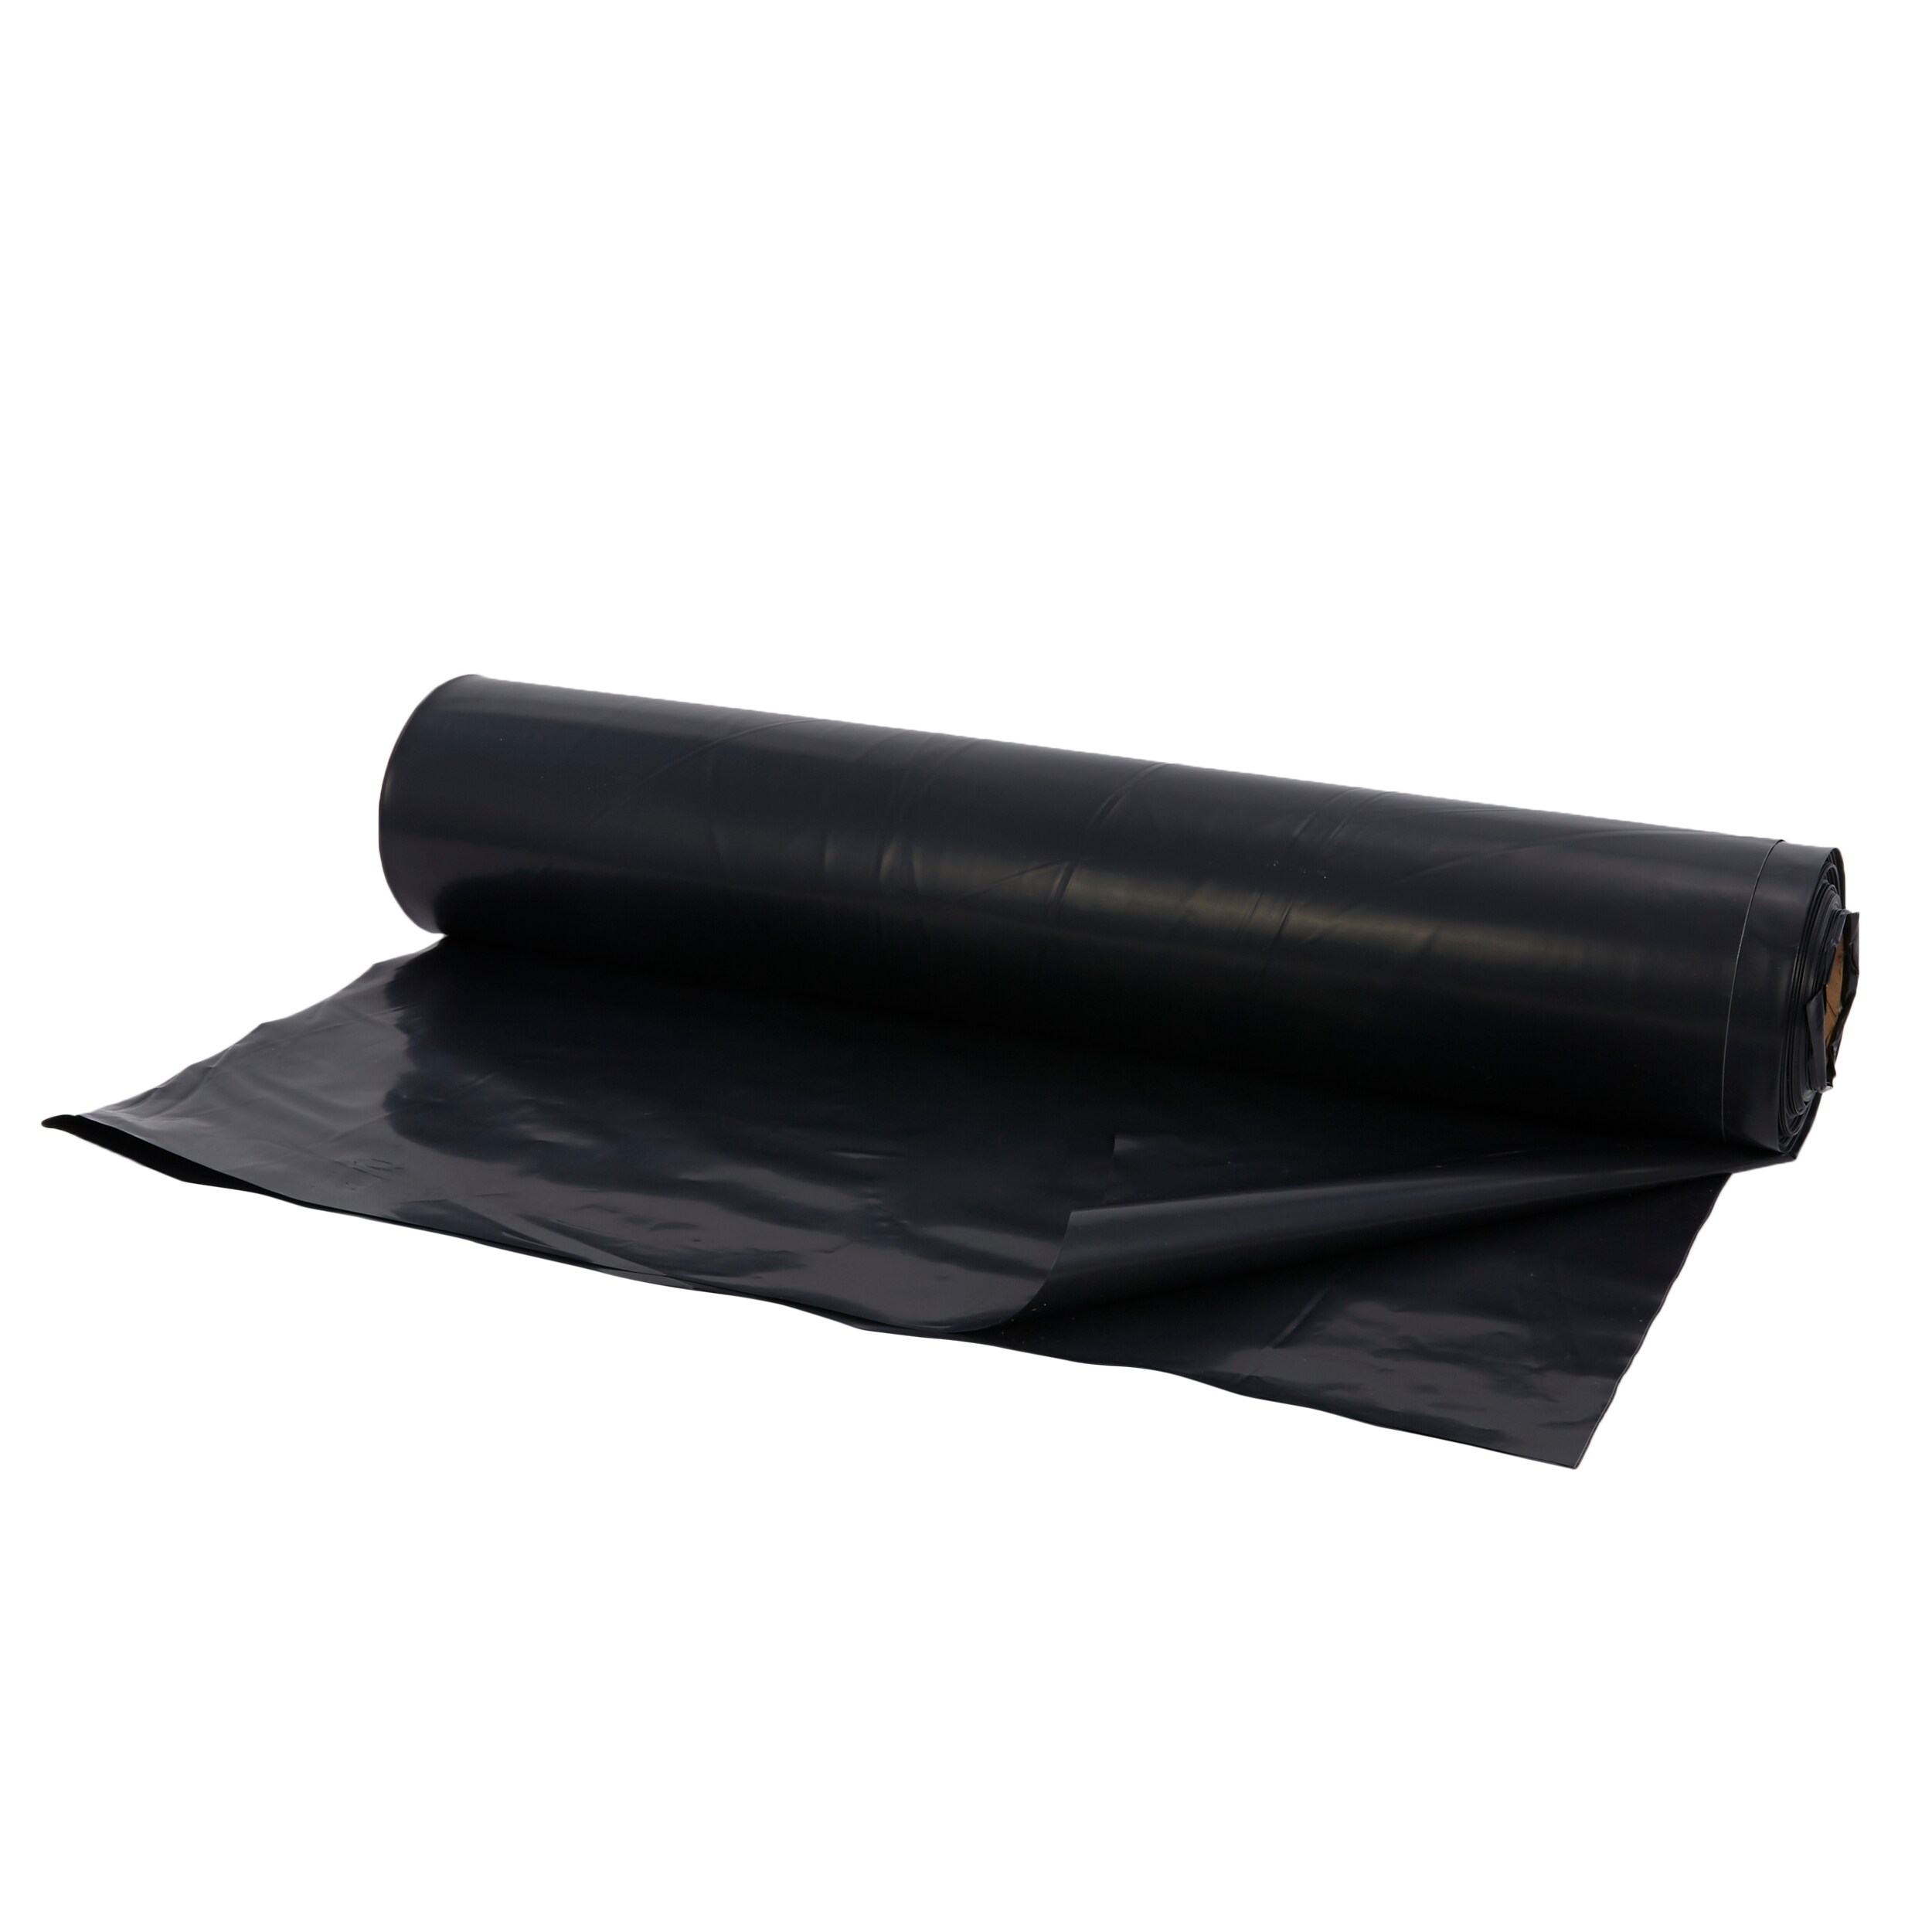 VBS - Black Plastic Sheeting - 10 mil - (10' x 100') – Black Plastic Roll  for Spray Barrier, Roll of Plastic Sheeting Heavy Duty, Thick Plastic